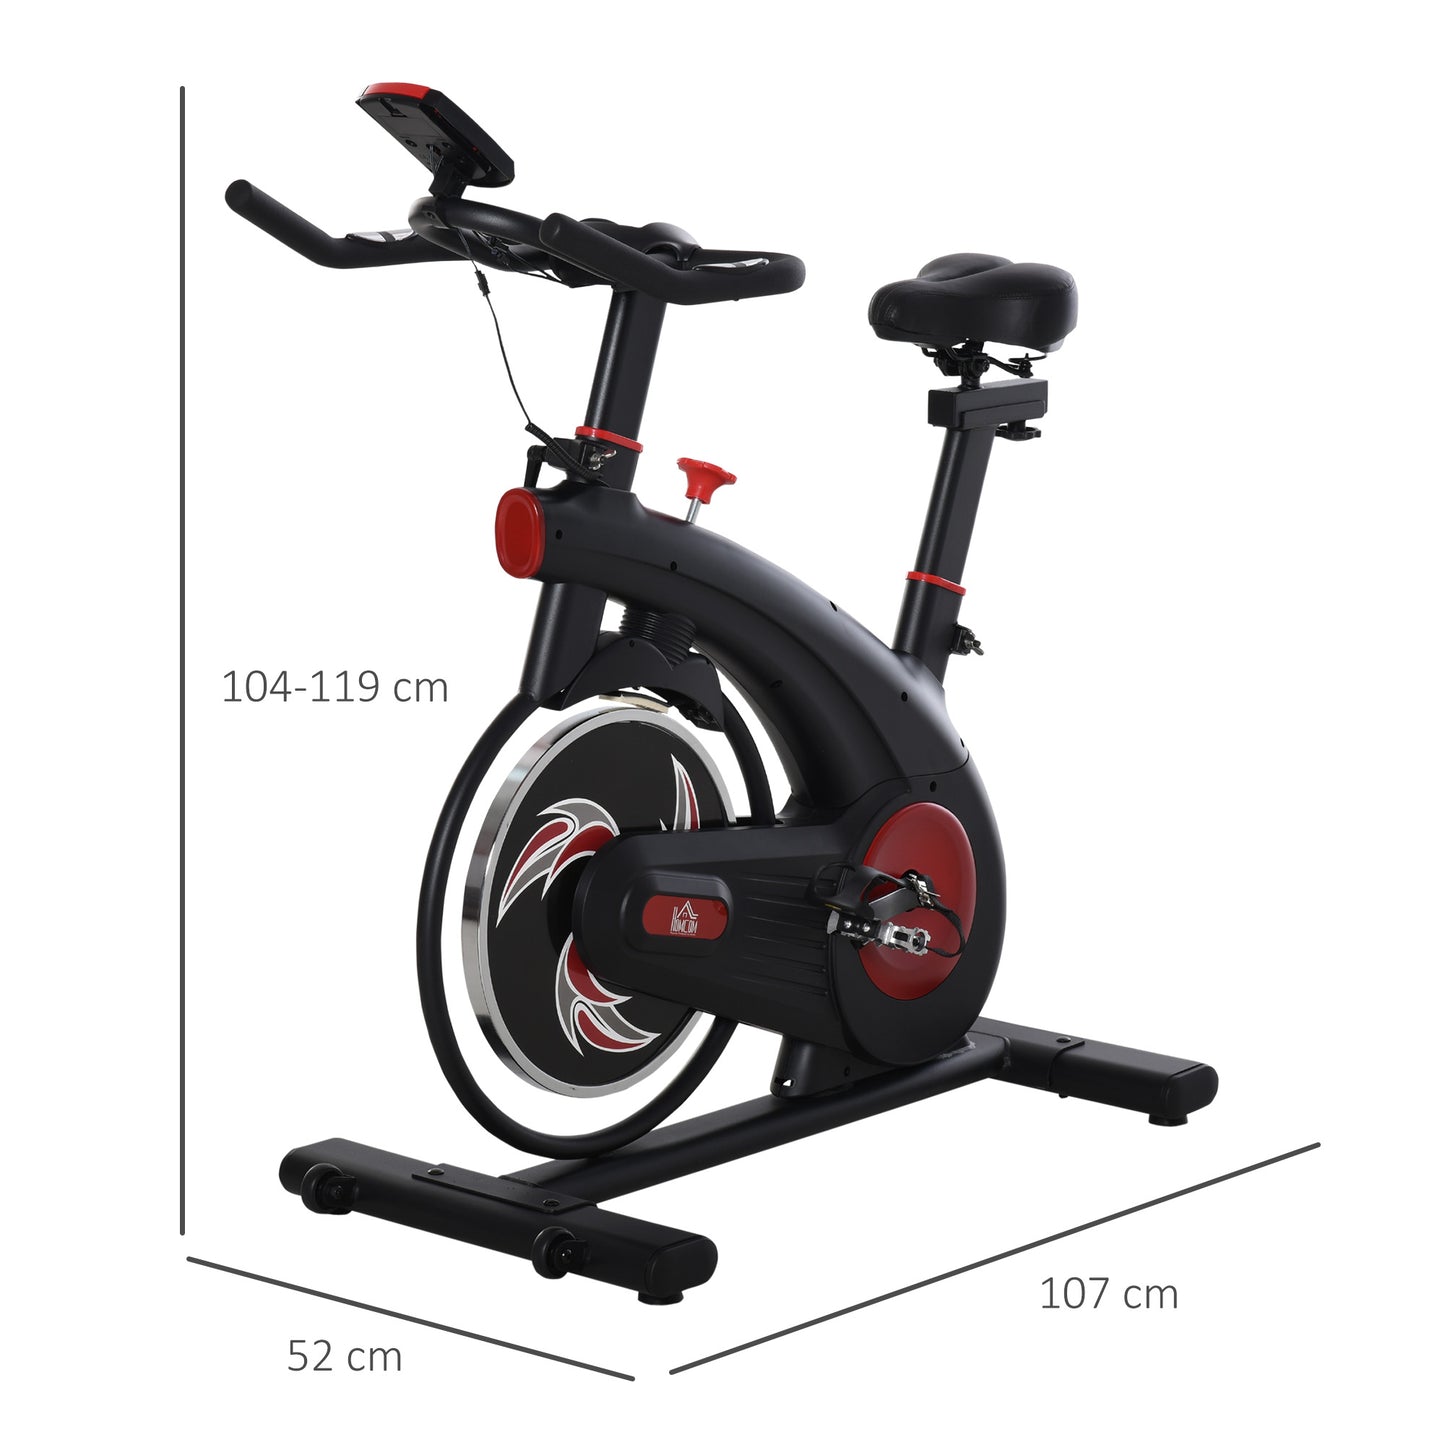 HOMCOM Upright Exercise Bike Trainer with Adjustable Resistance Seat Racing Bike Handlebar LCD Display 8 Kg Flywheel